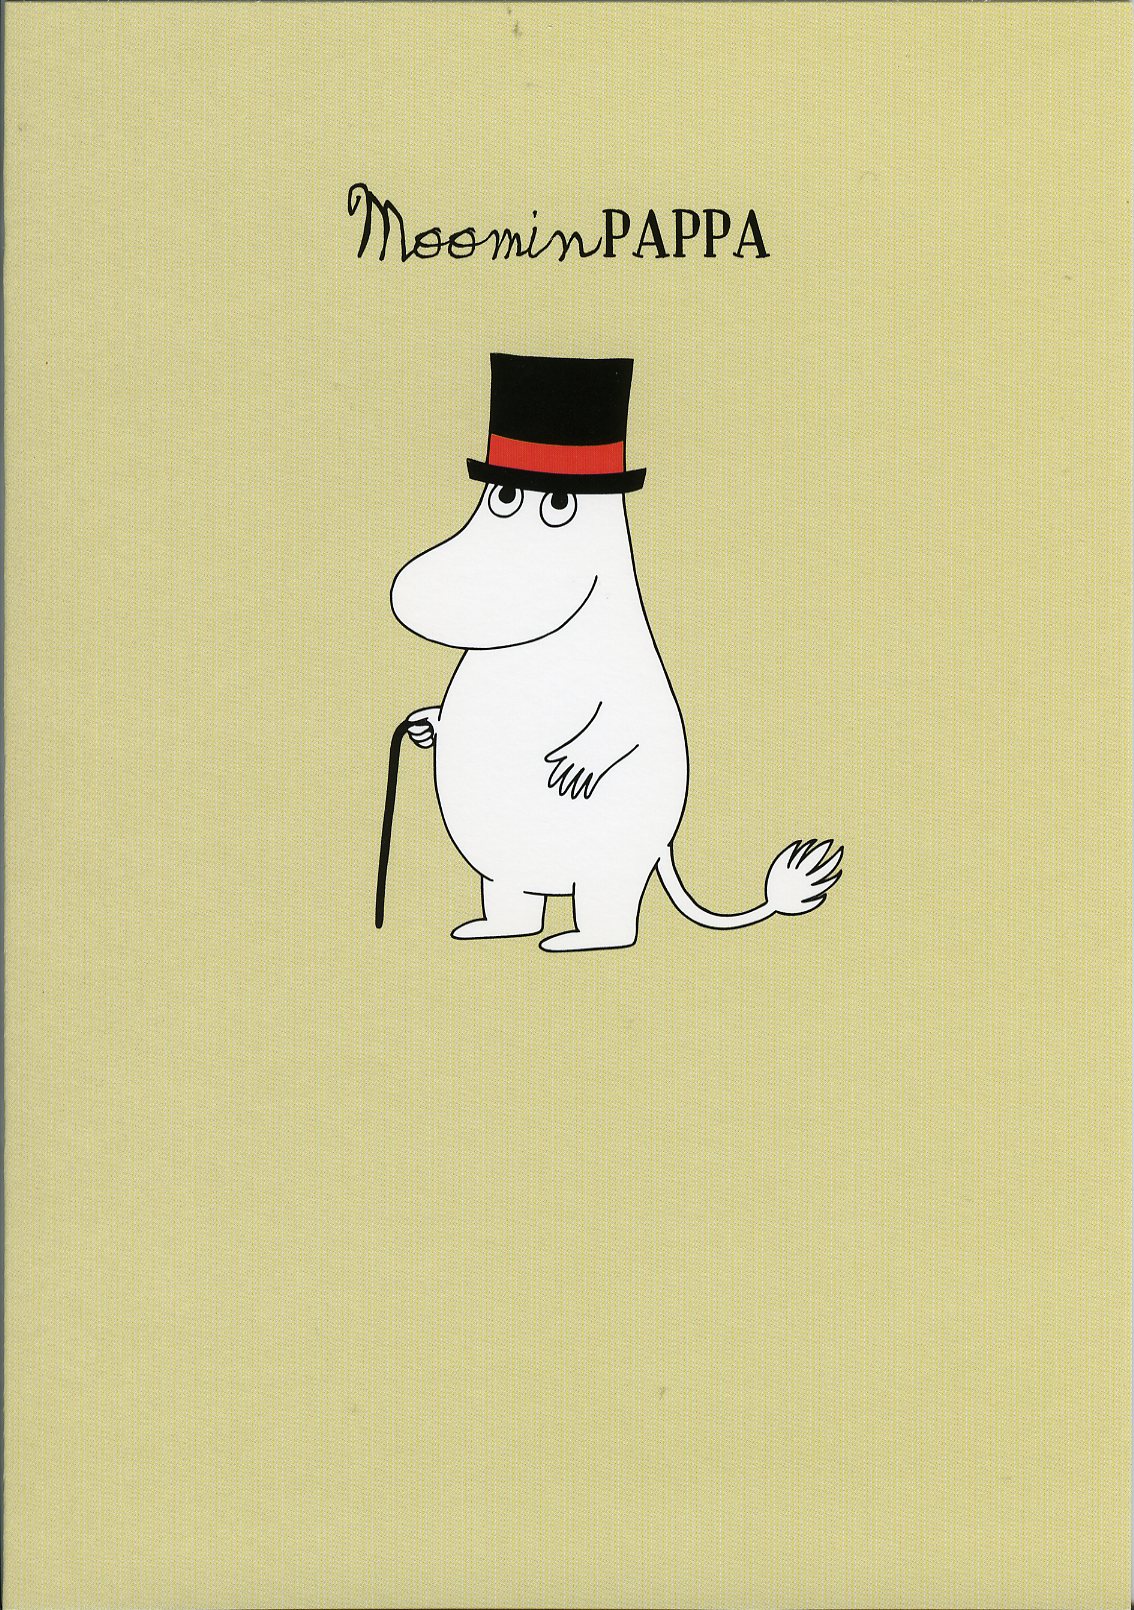 Moomin: Moominpappa Greeting Card